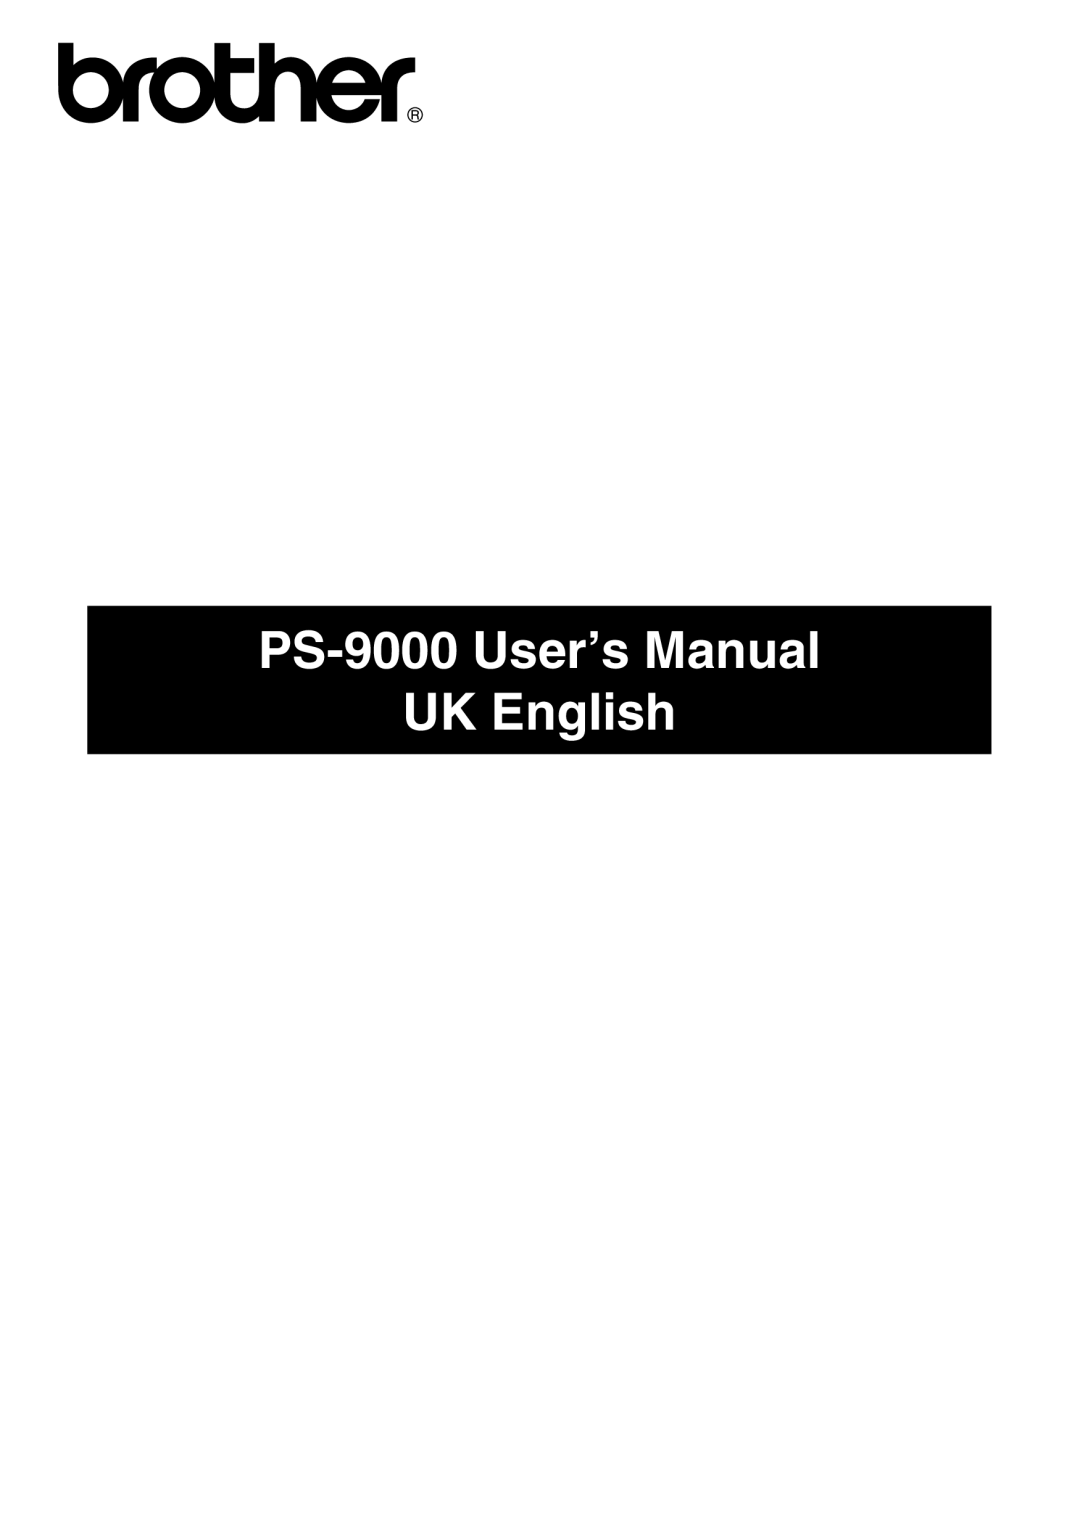 Brother user manual PS-9000 User’s Manual UK English 